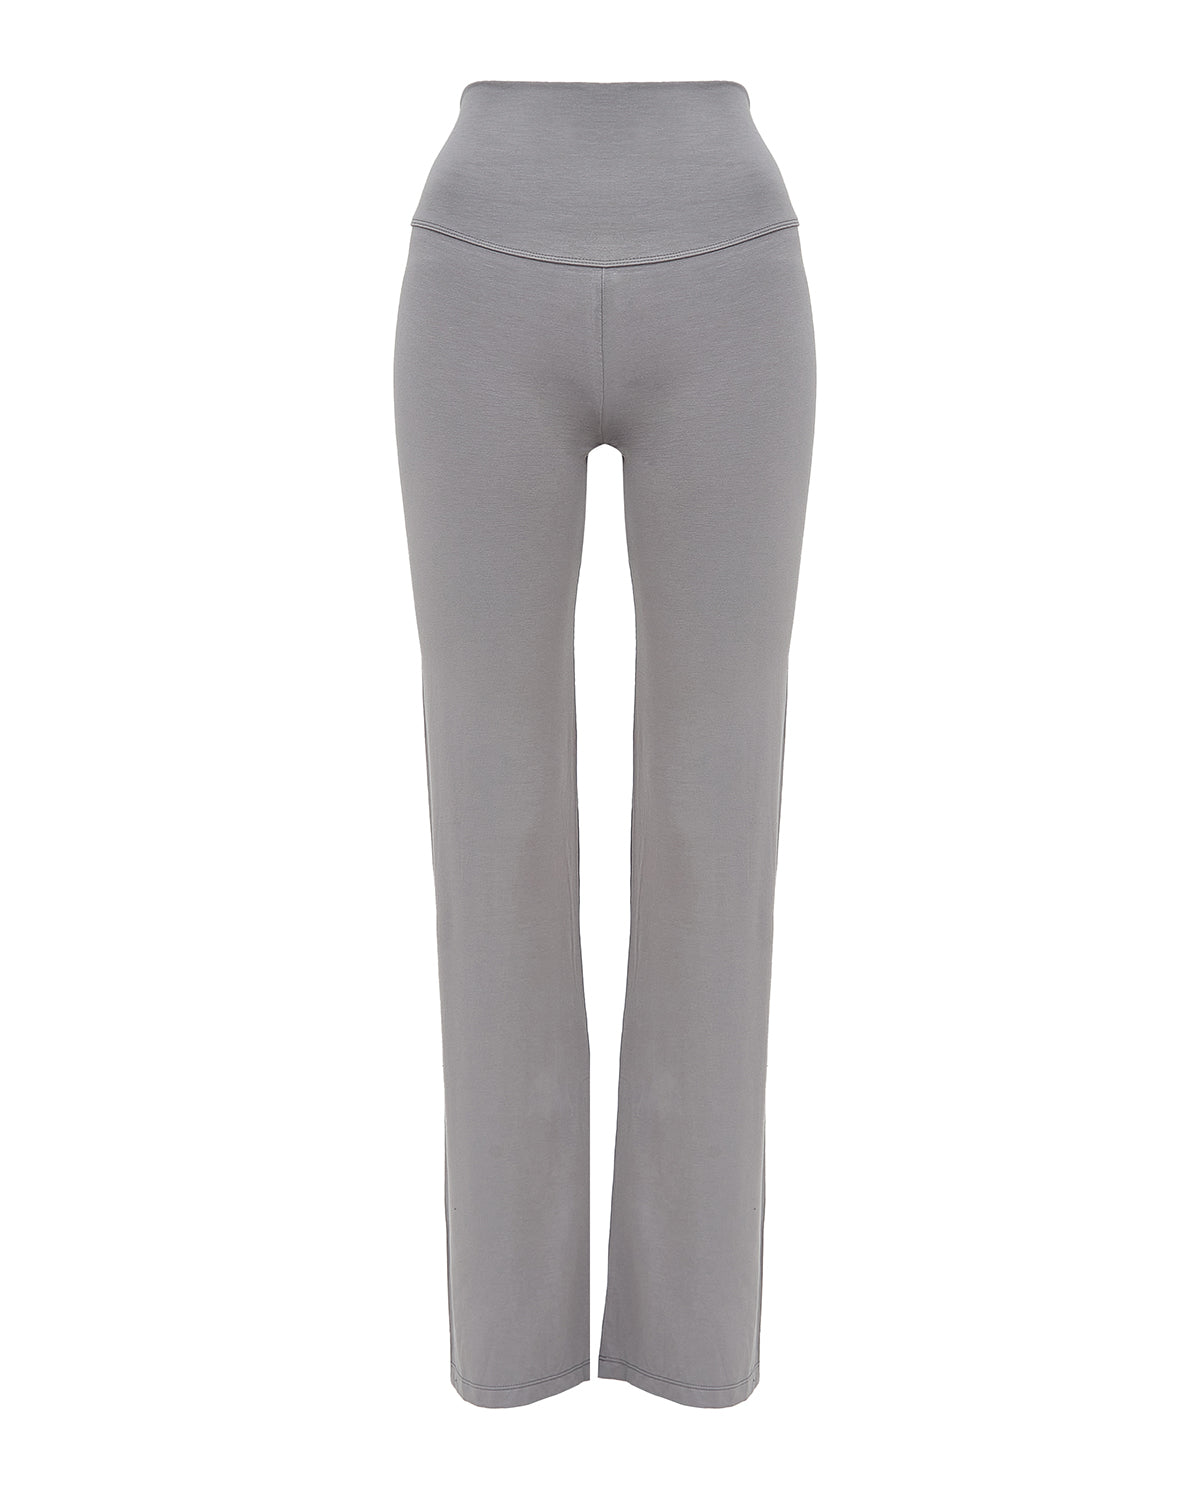 Basic Flare Pants in Stone Grey